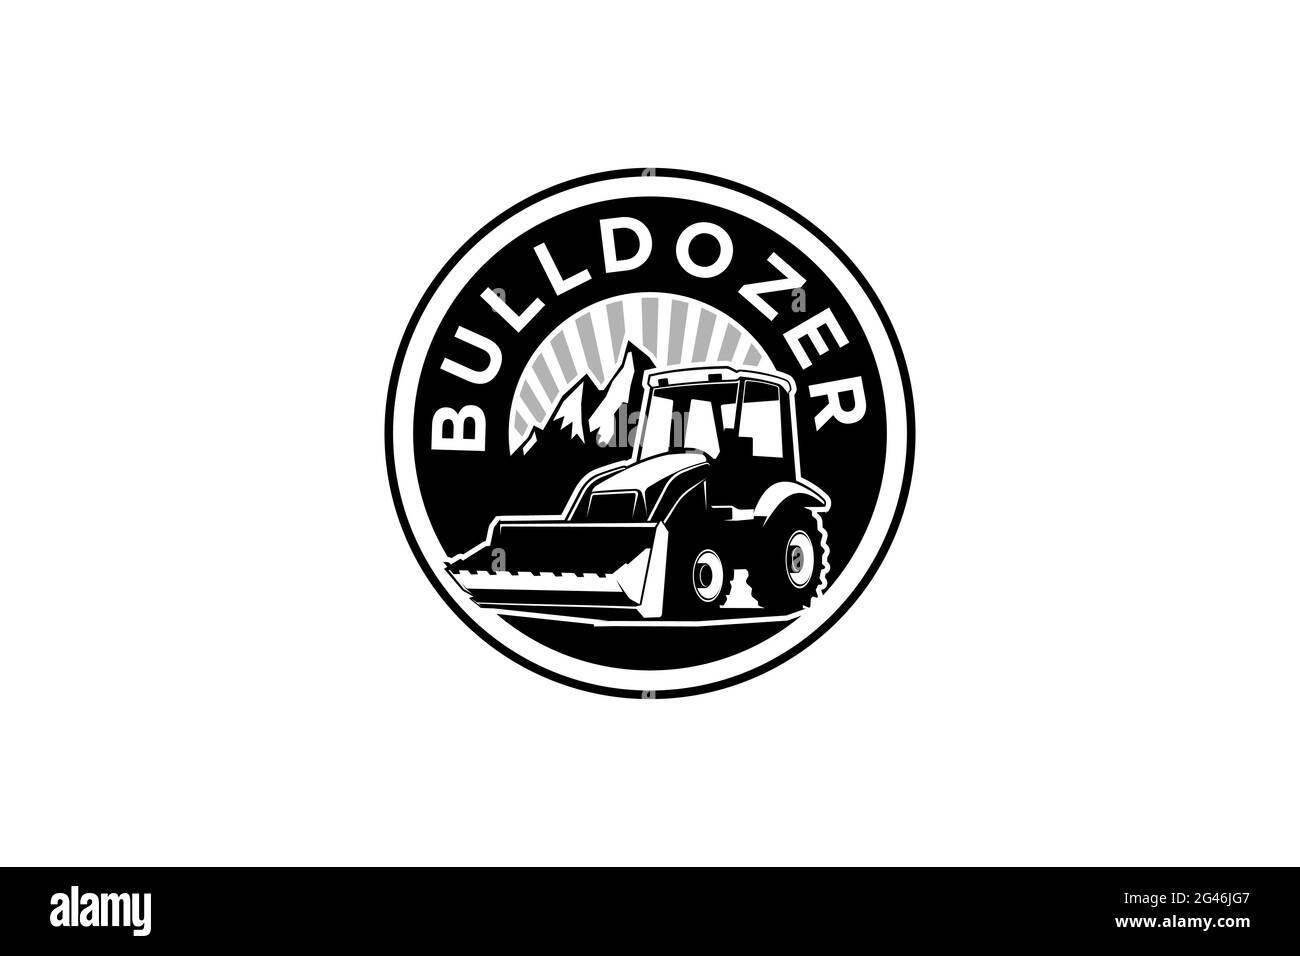 Bulldozer logo template vector. Heavy equipment logo vector for construction company. Creative excavator illustration Stock Vector